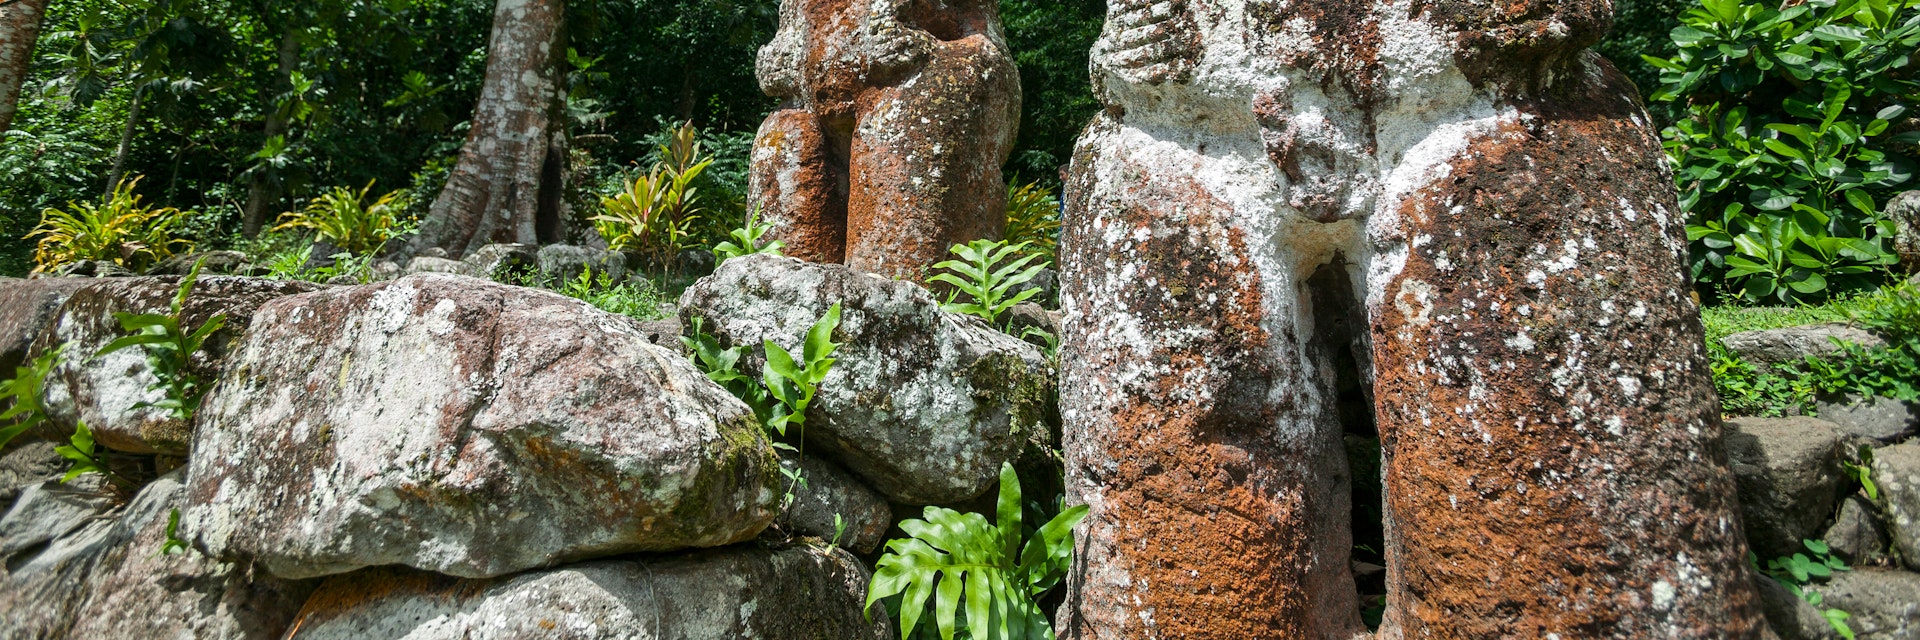 historic stone statues, so called Tikis, on Hiva Oa Island, Marquesas Islands, French Polynesia; Shutterstock ID 1108396337; your: Erin Lenczycki; gl: 65050; netsuite: Online Editorial; full: Destination